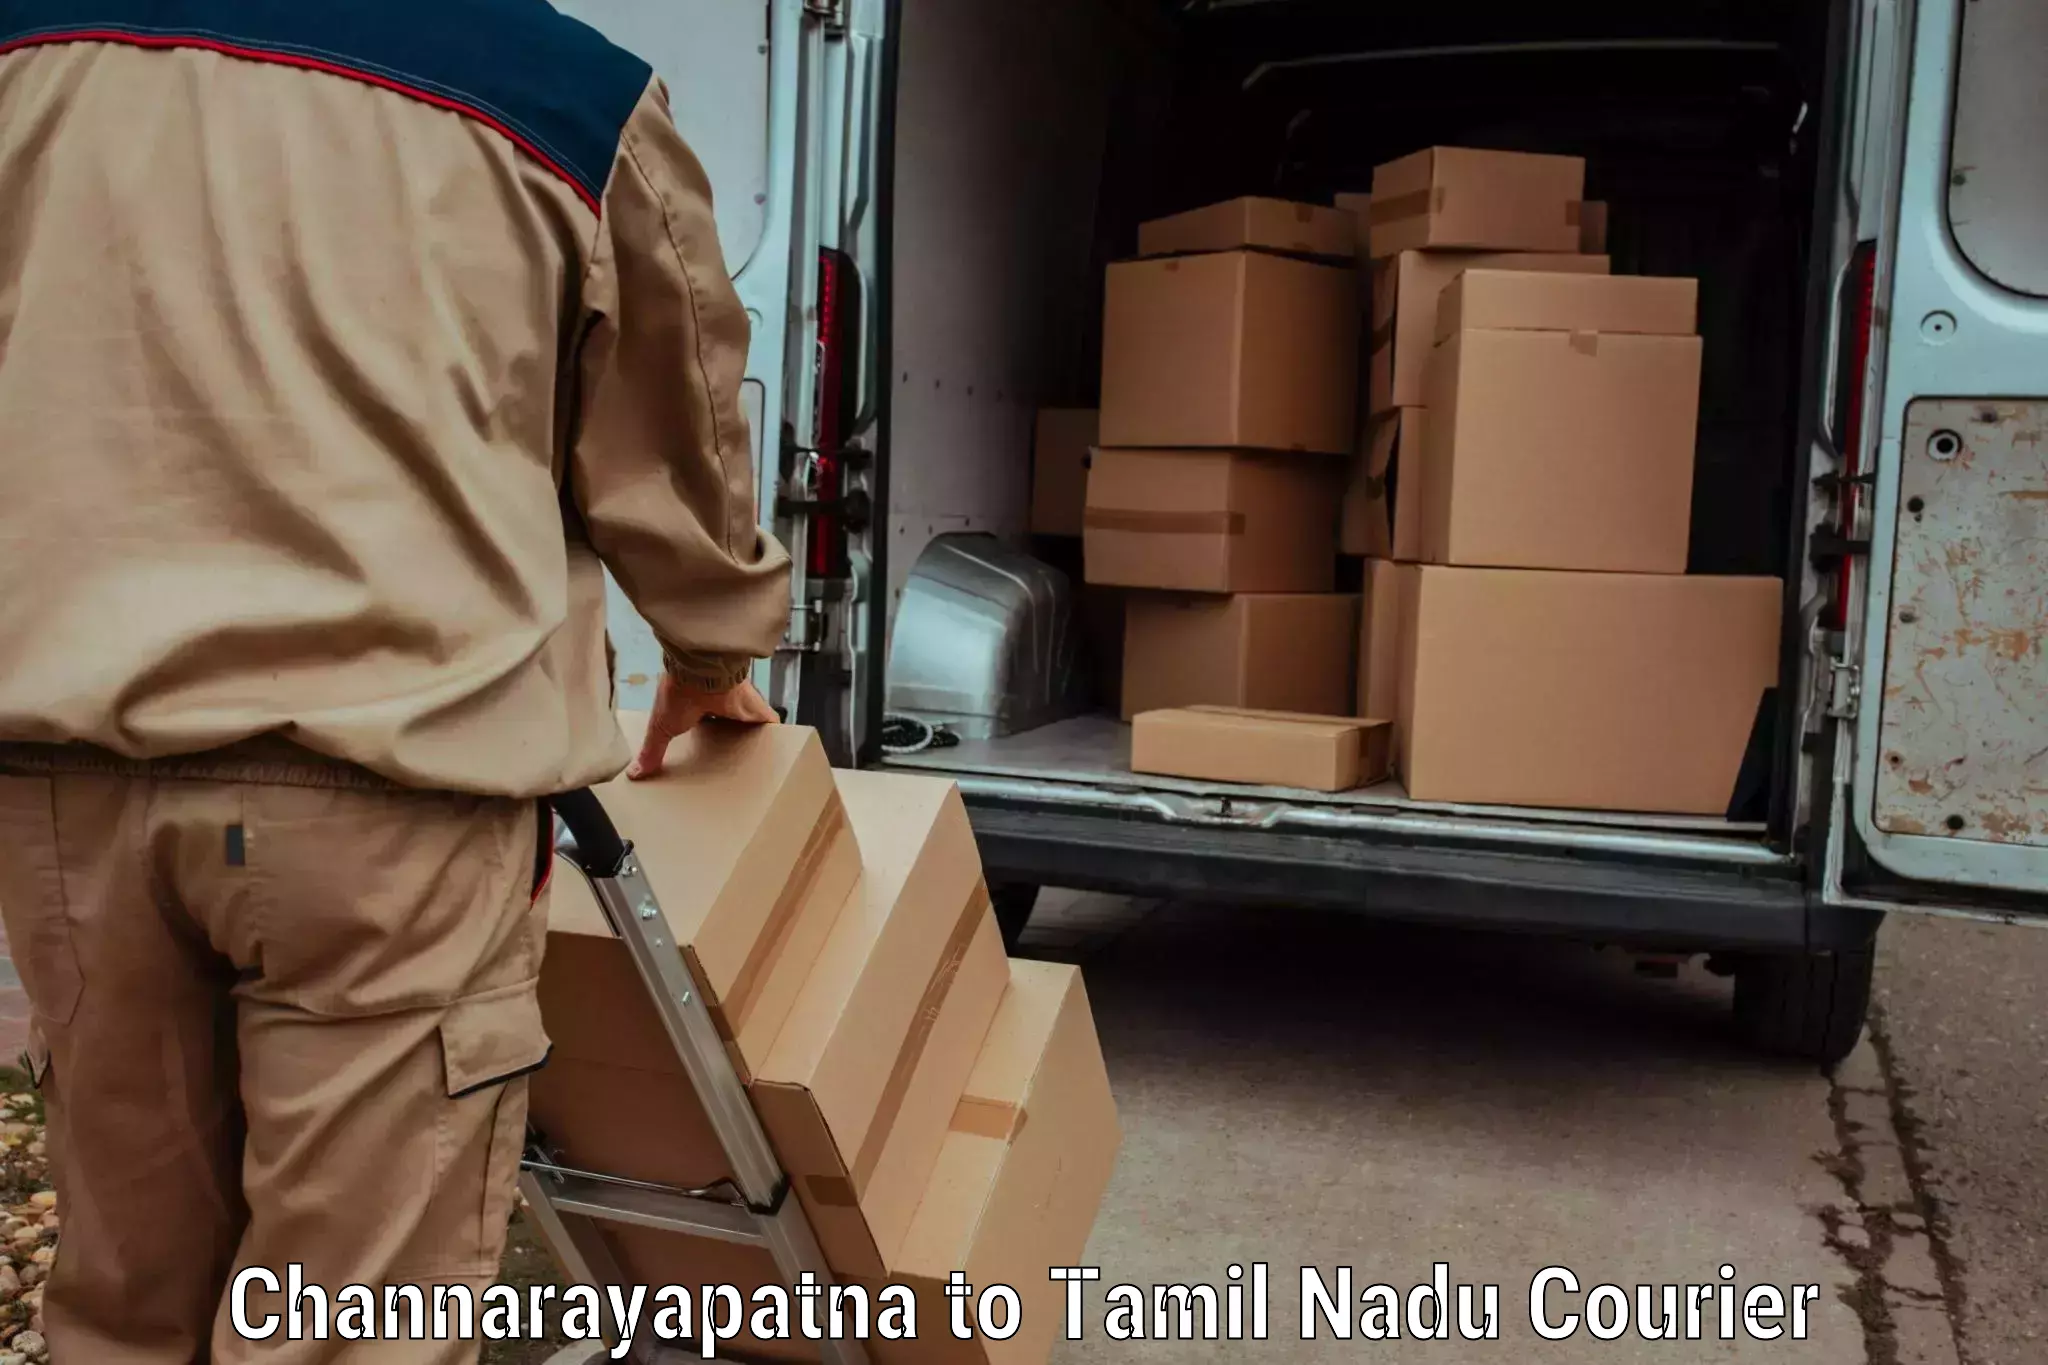 Tracking updates Channarayapatna to Tamil Nadu